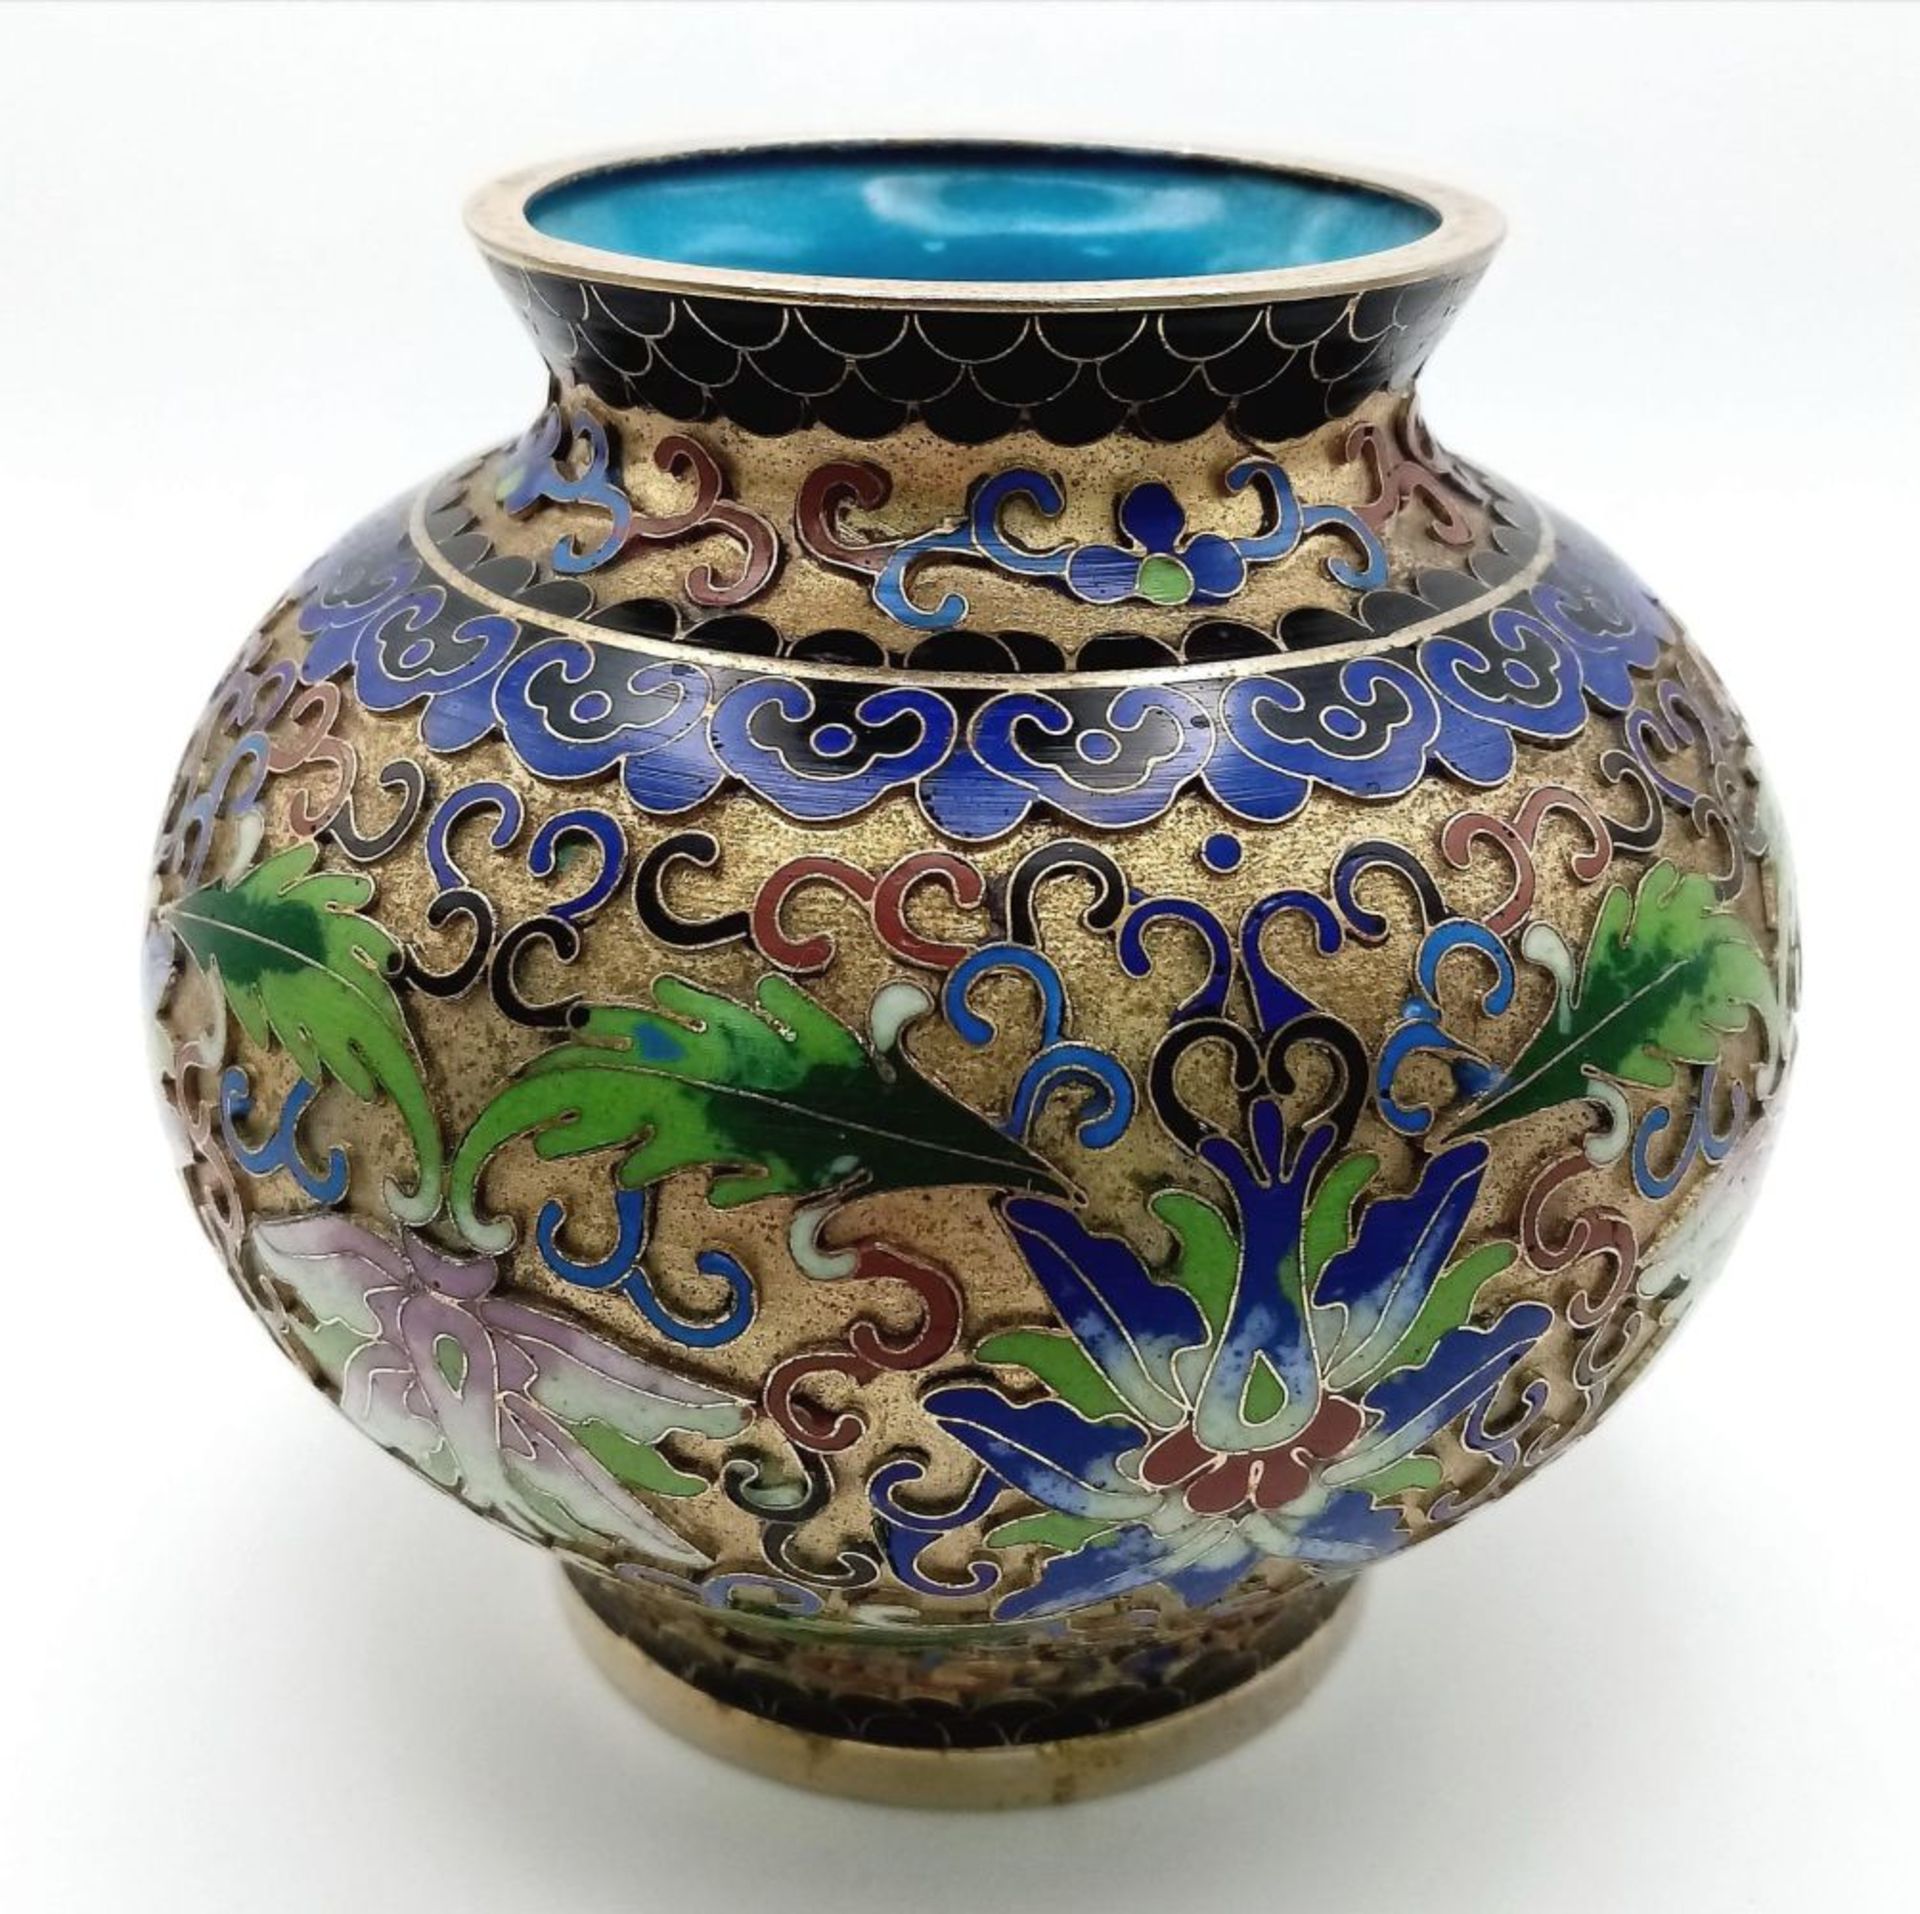 Stunning vintage Chinese Cloisonné Enamel Circular Pot. Wonderful floral decoration against a gold - Image 5 of 5